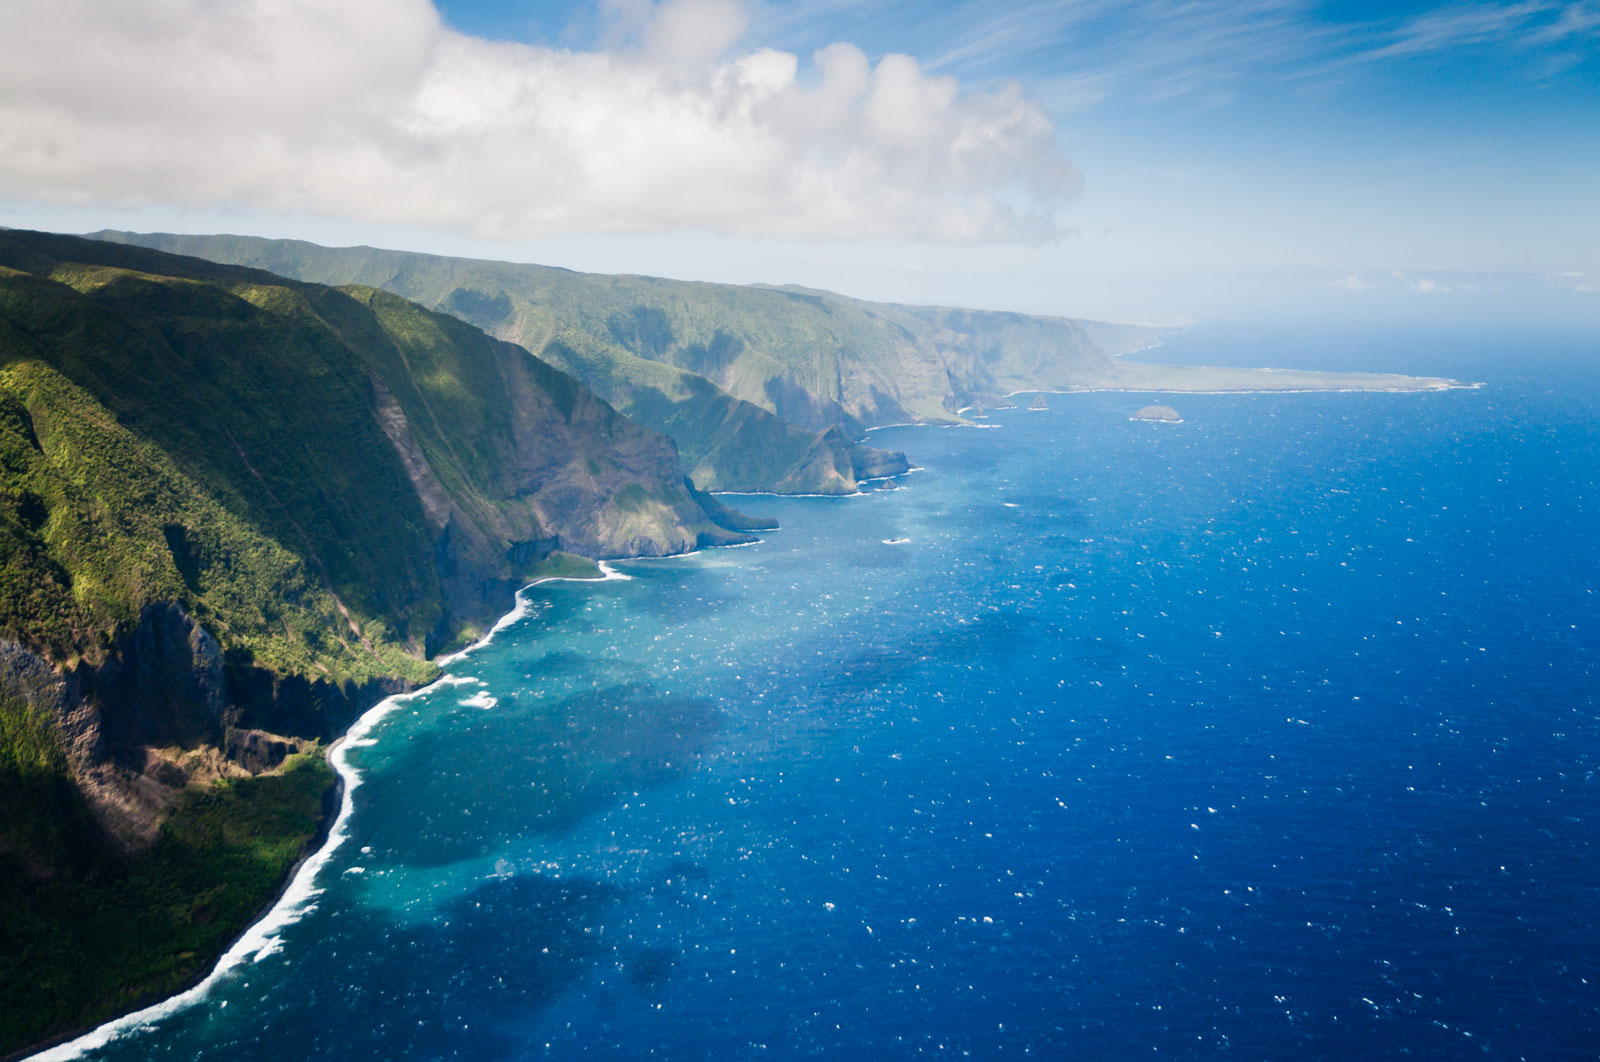 Where to stay in Hawaii Molokai